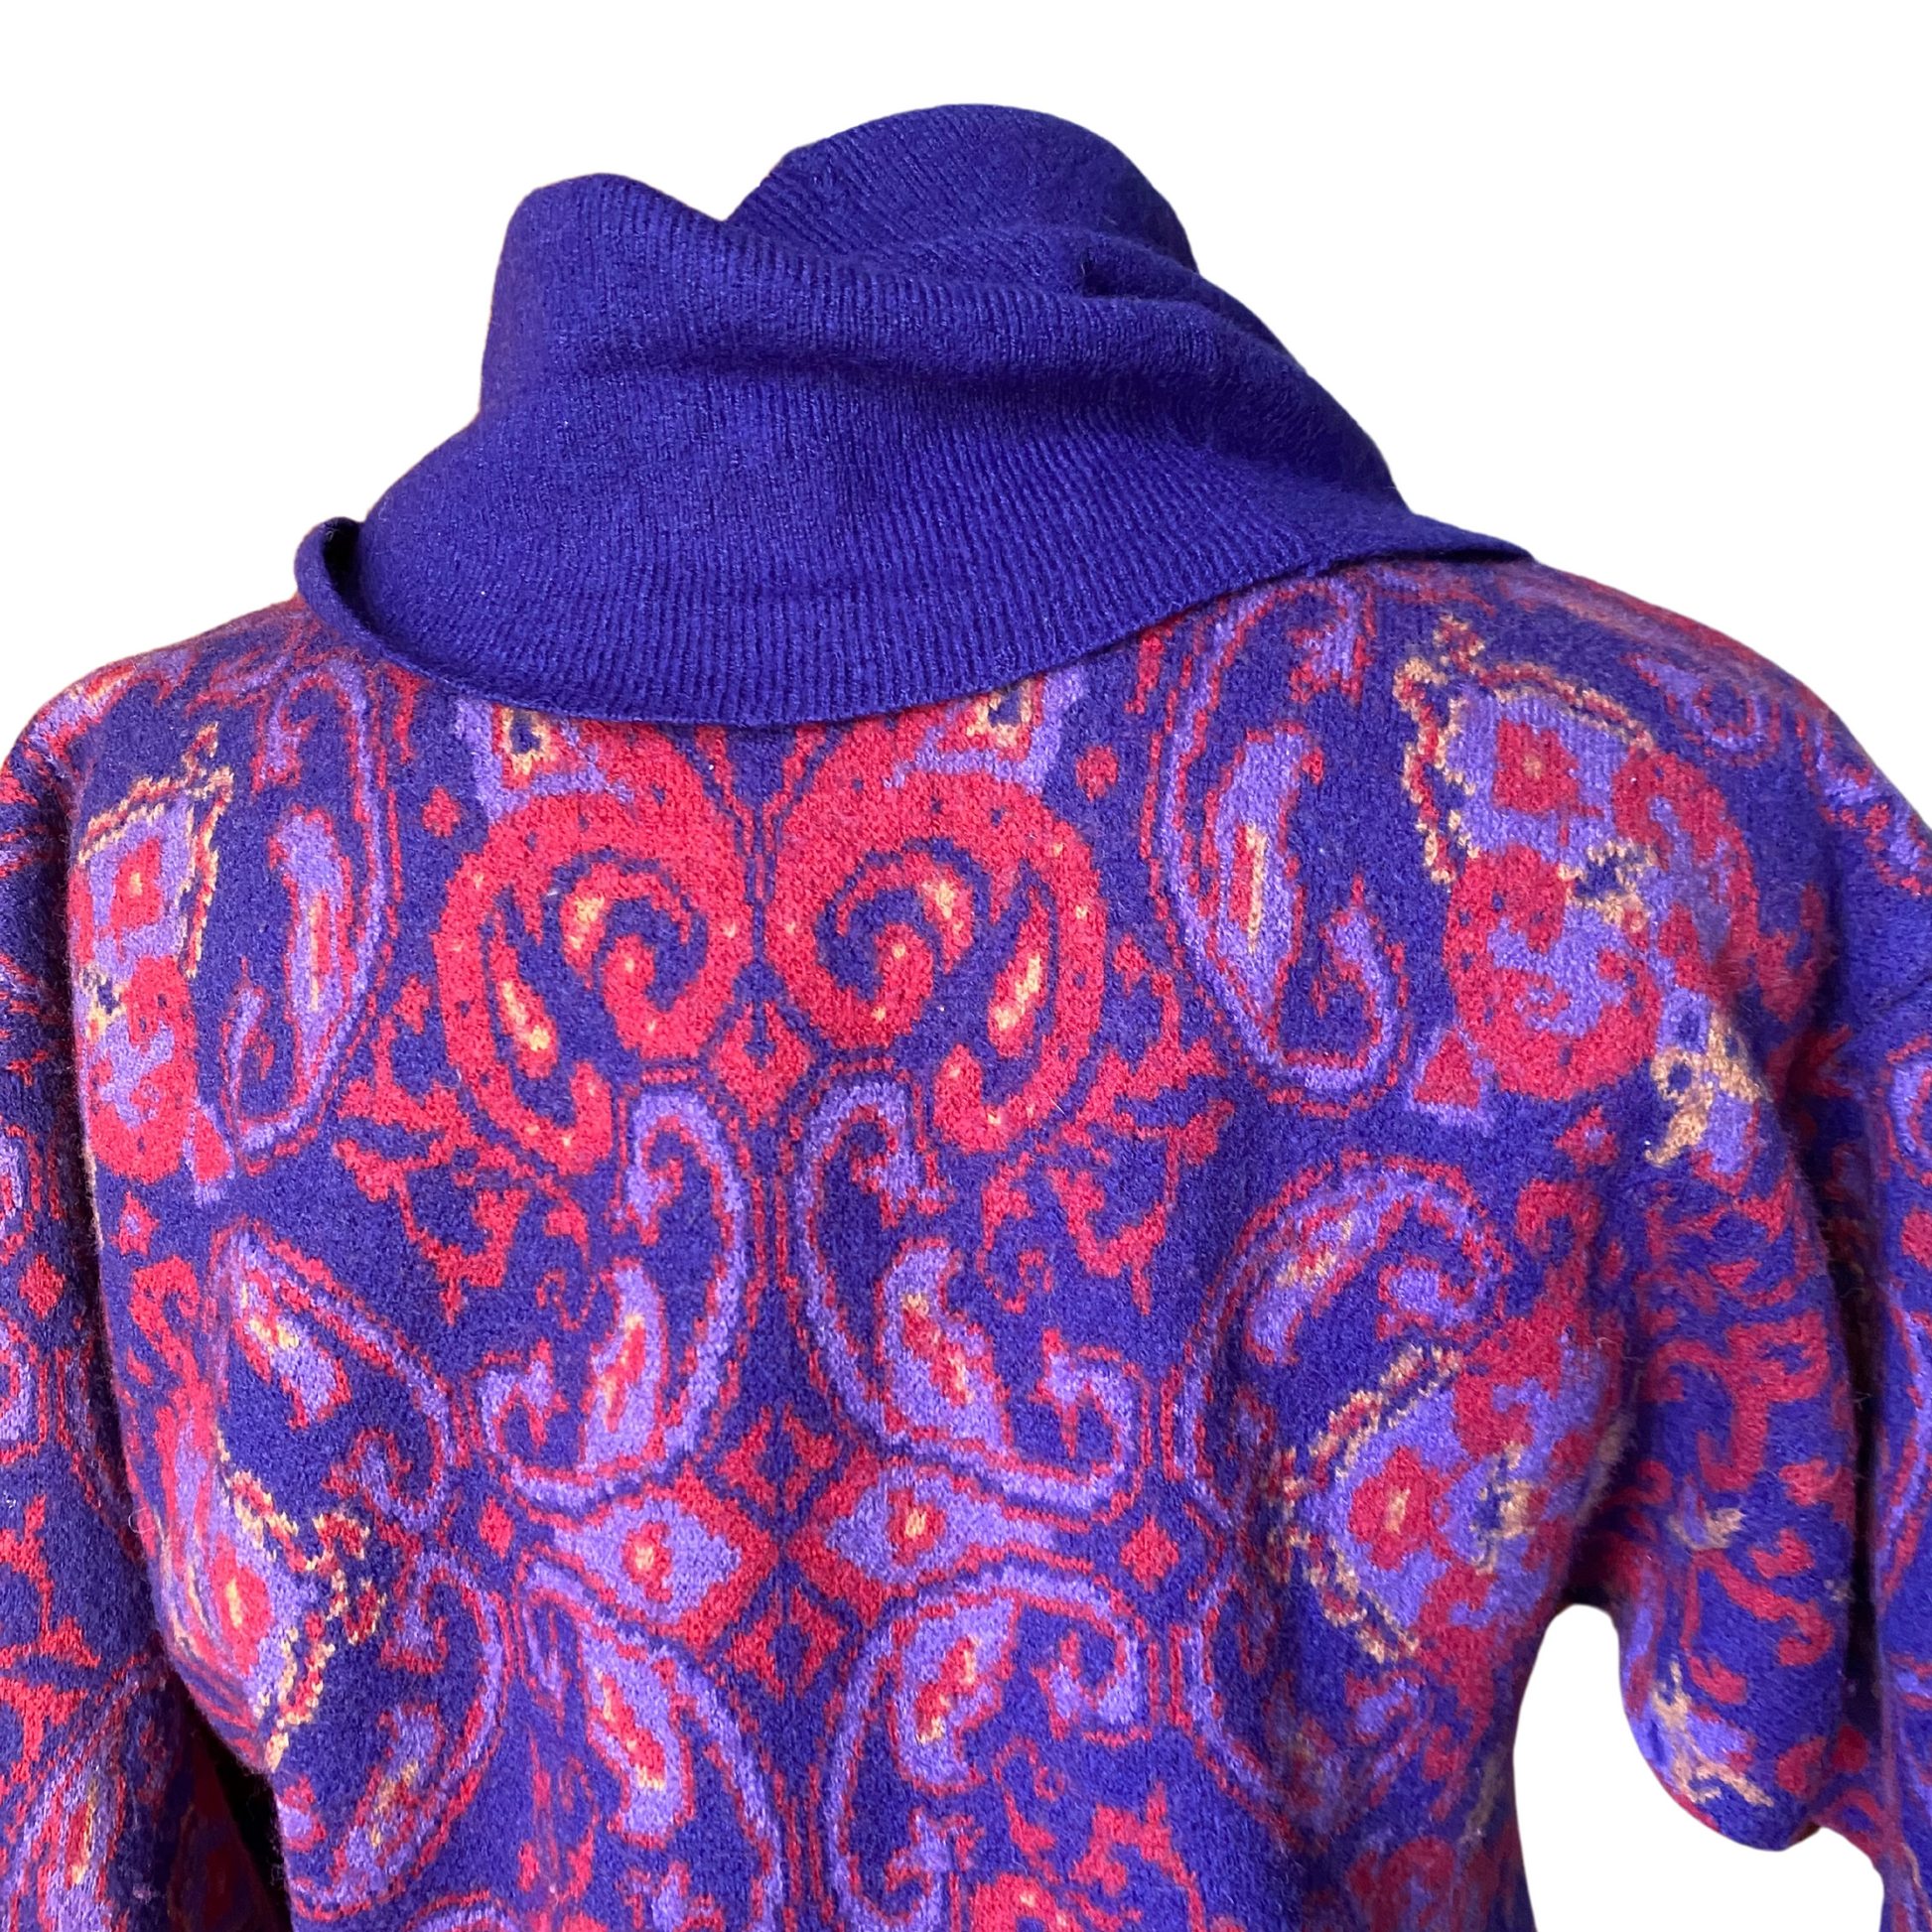 Back view of purple roll neck waist length jumper